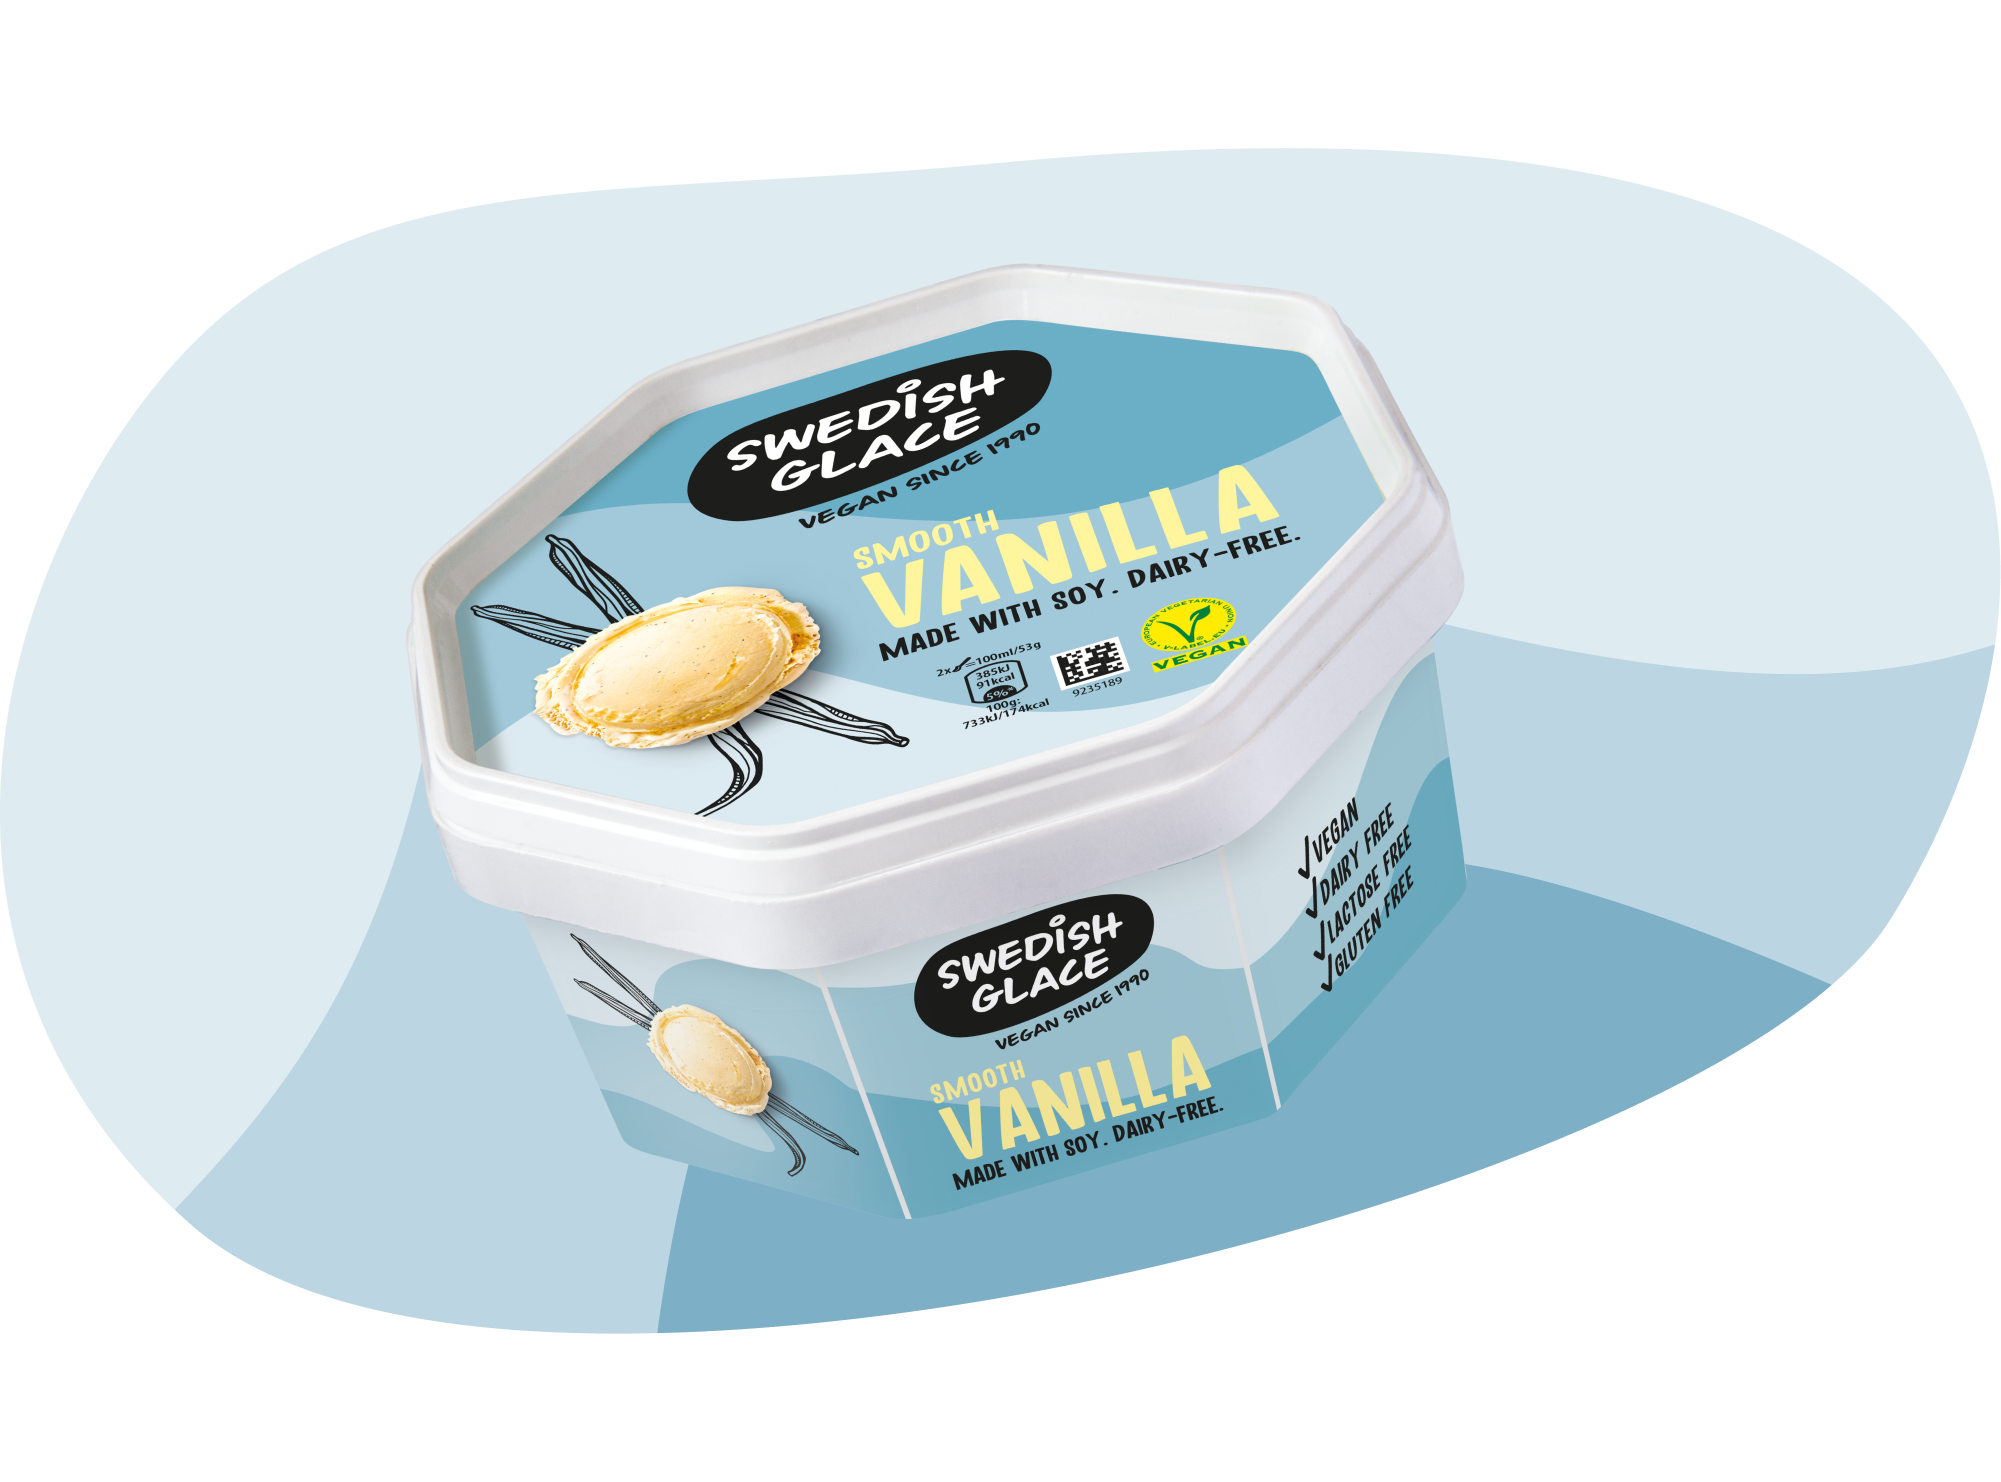 swedish glace vanilla